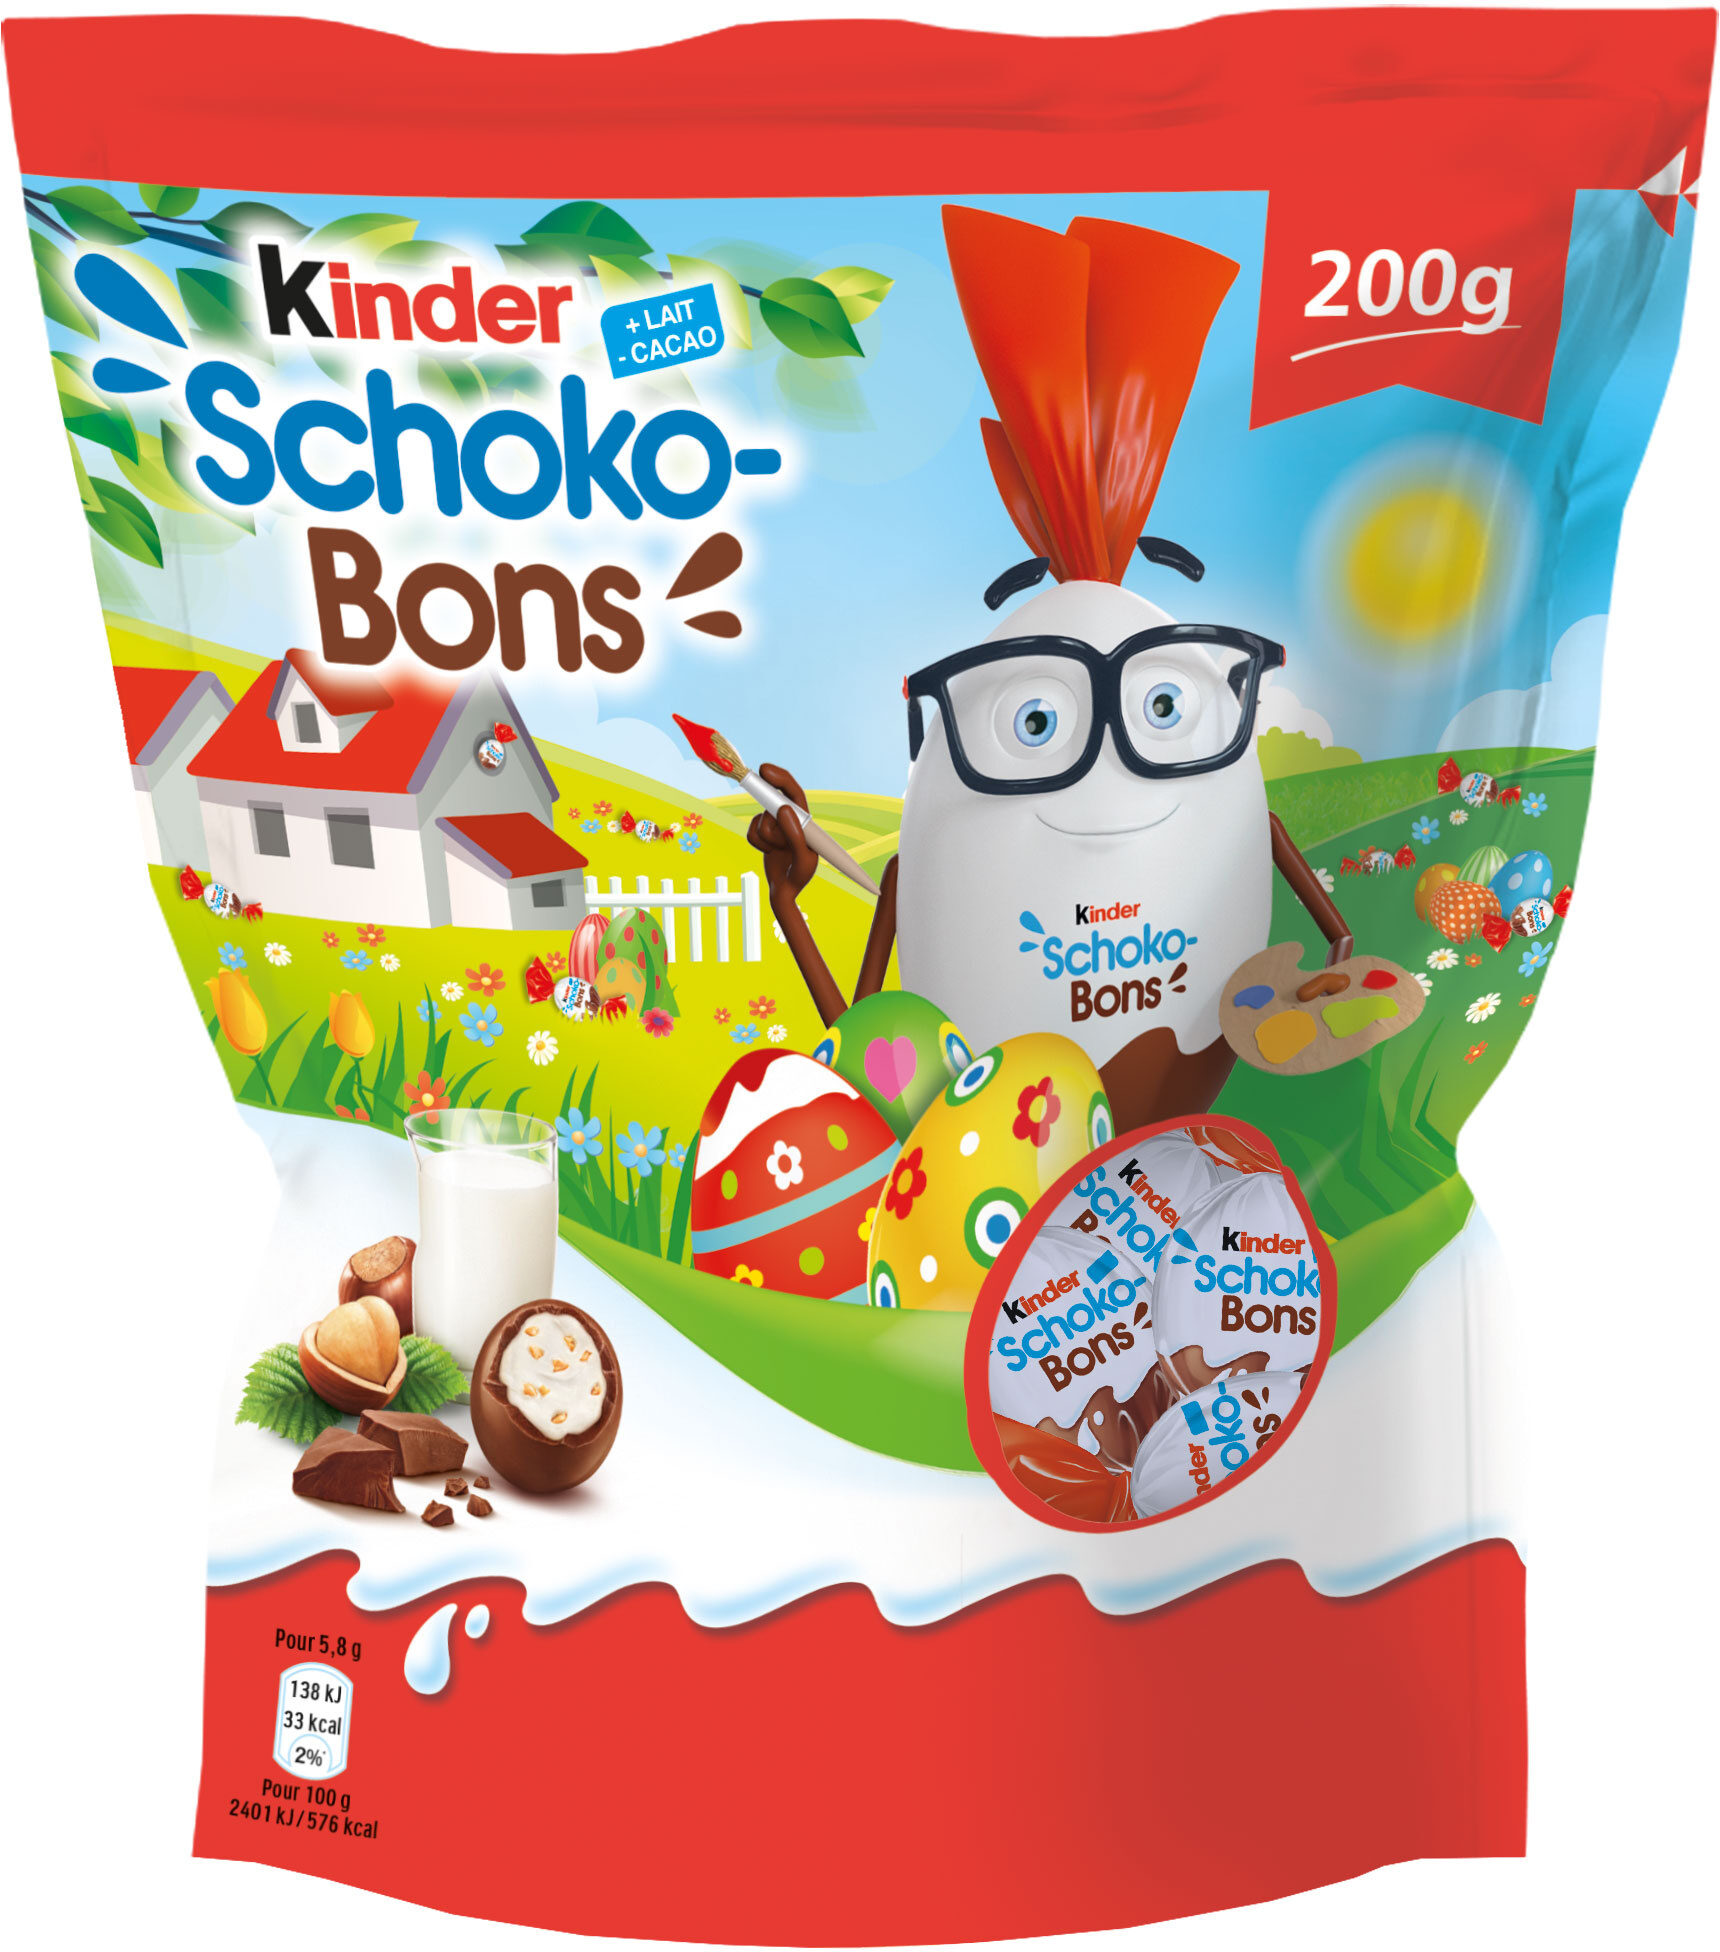 Kinder Schoko-Bons - Producto